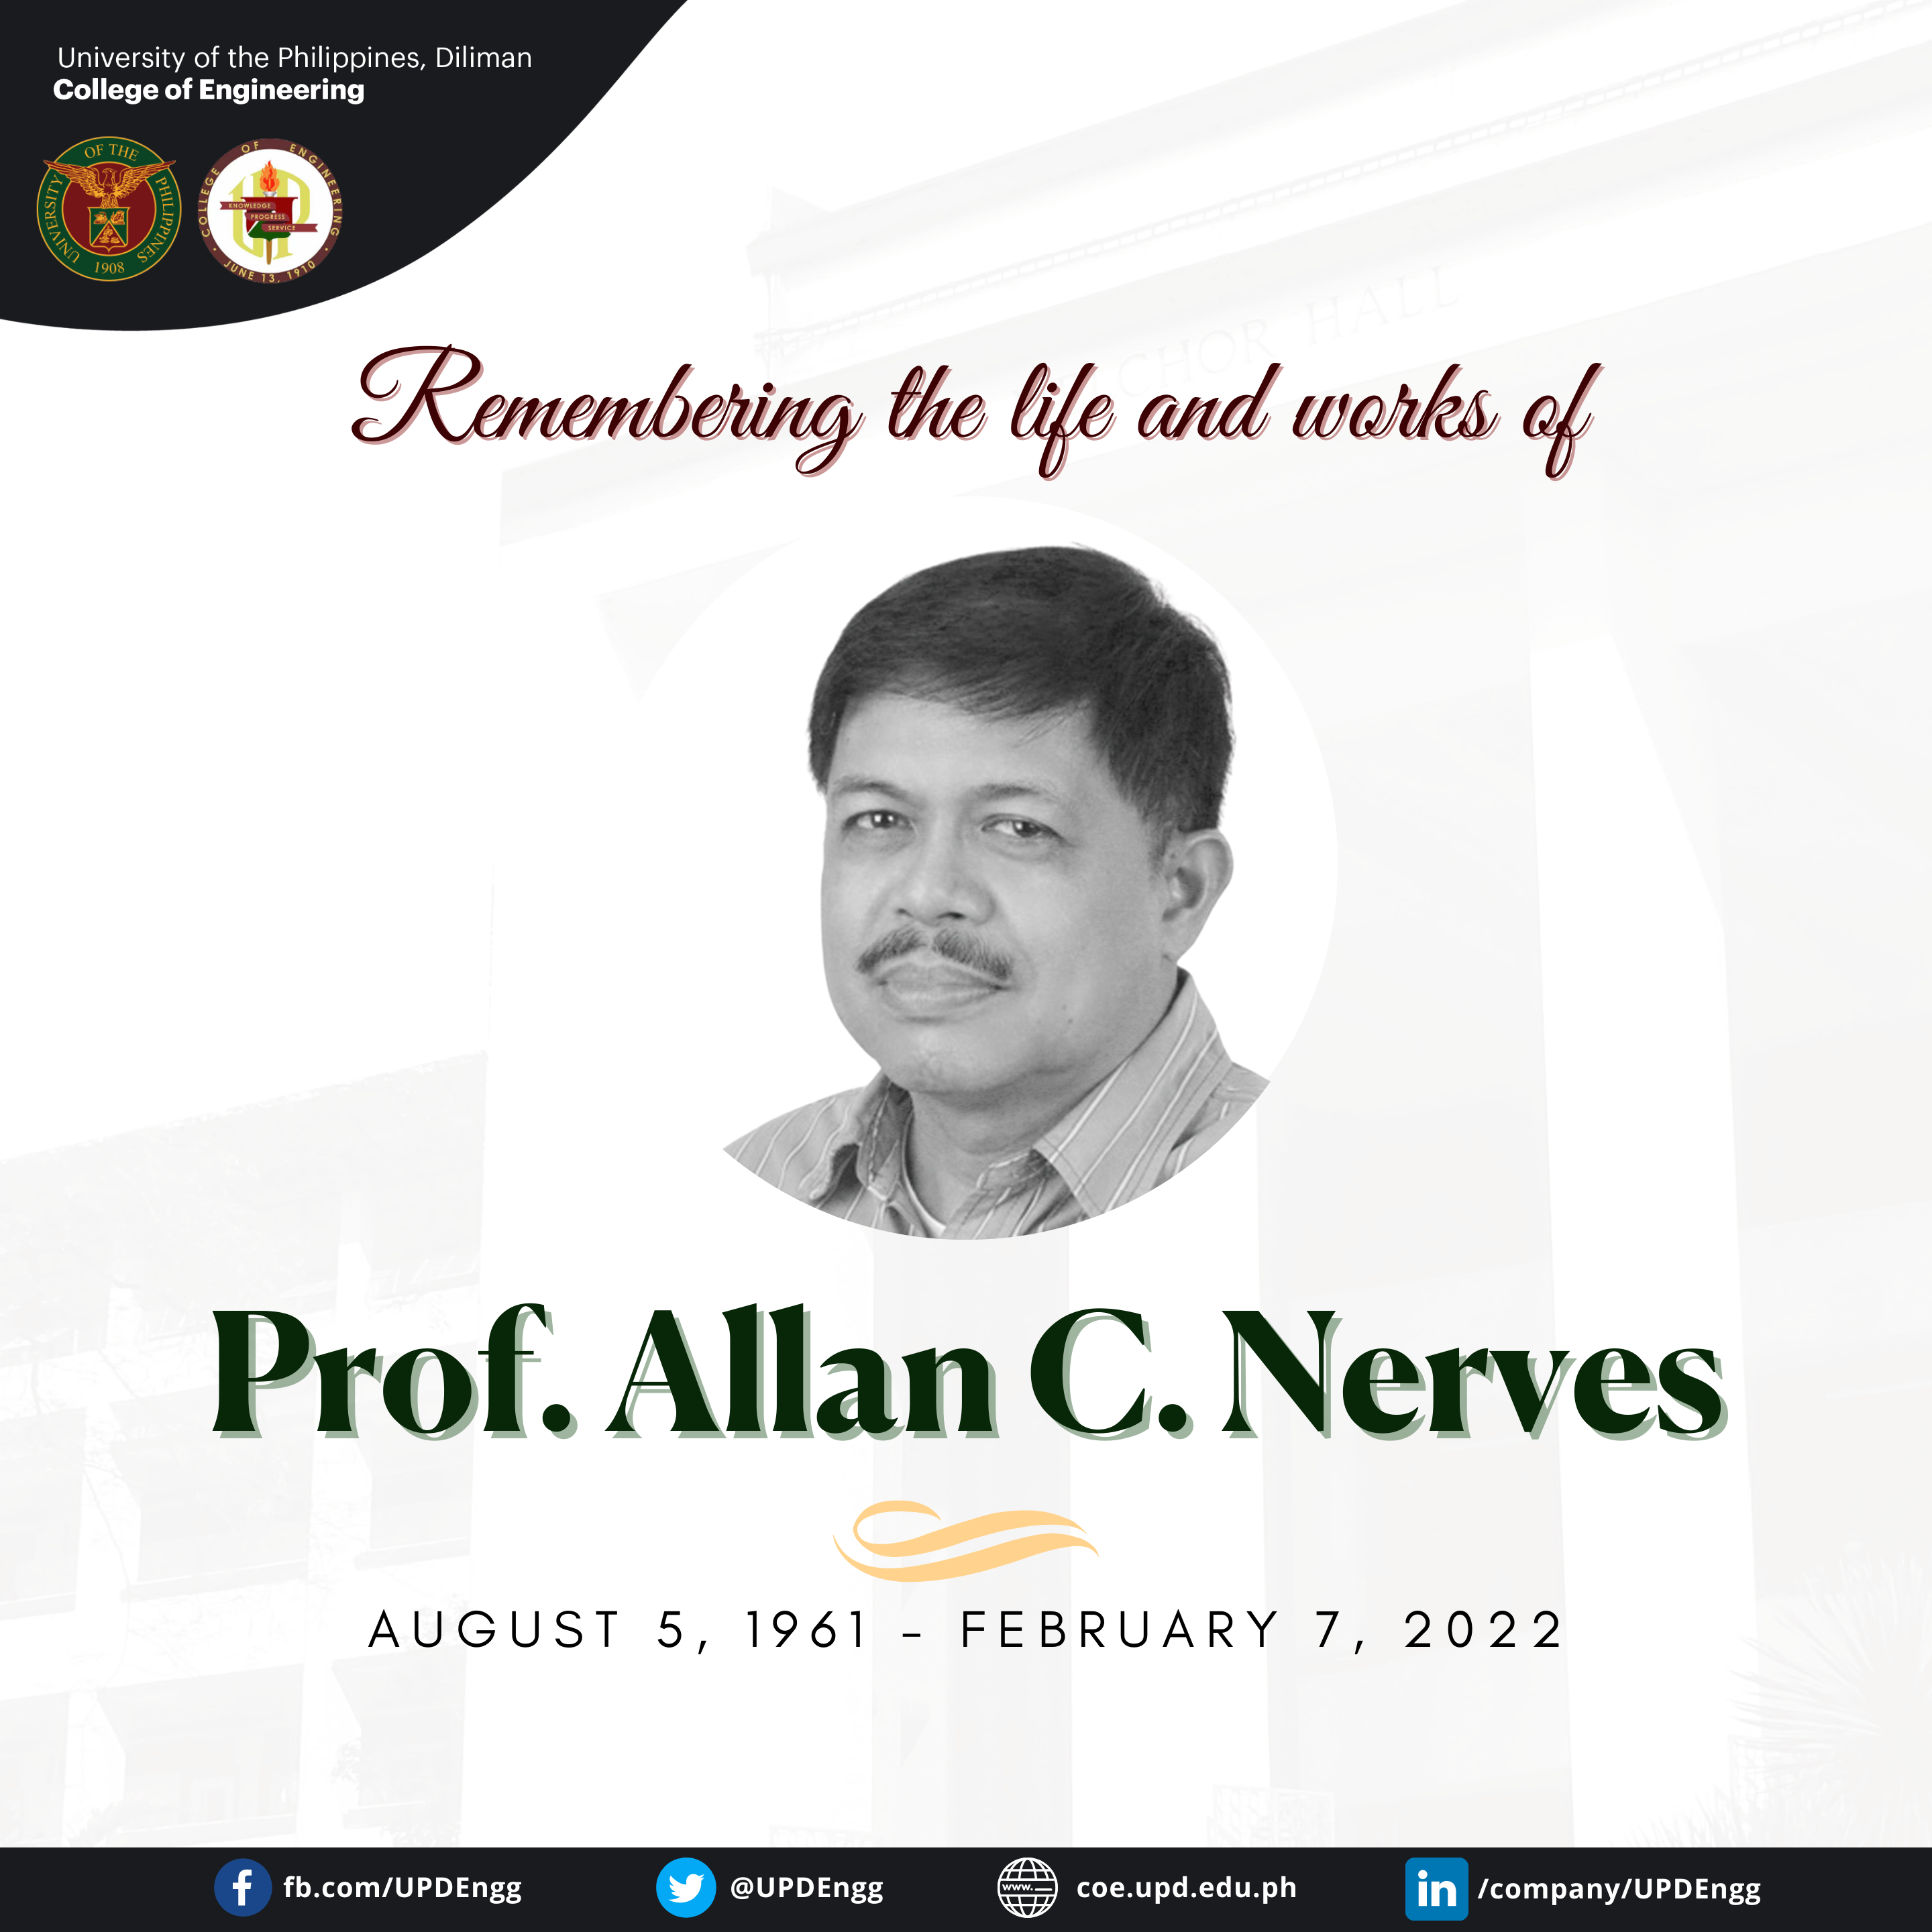 In memory of Prof. Allan C. Nerves